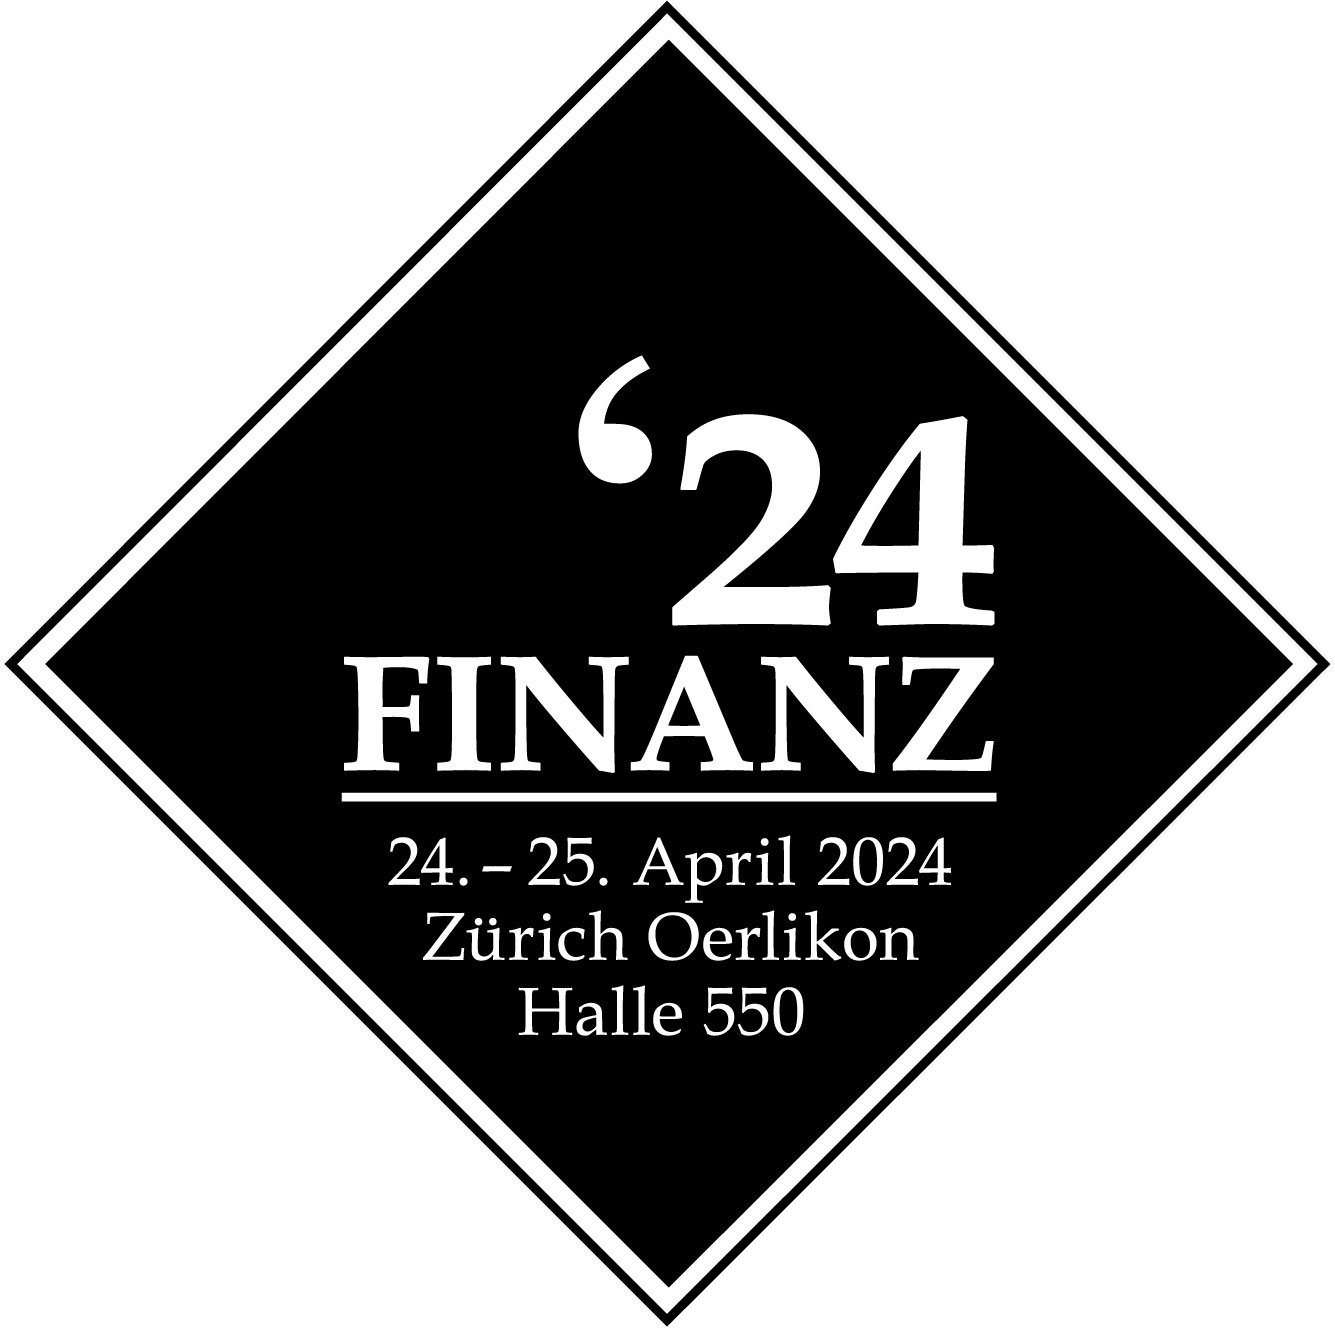 FINANZ 24 organized by JHM Finanzmesse AG